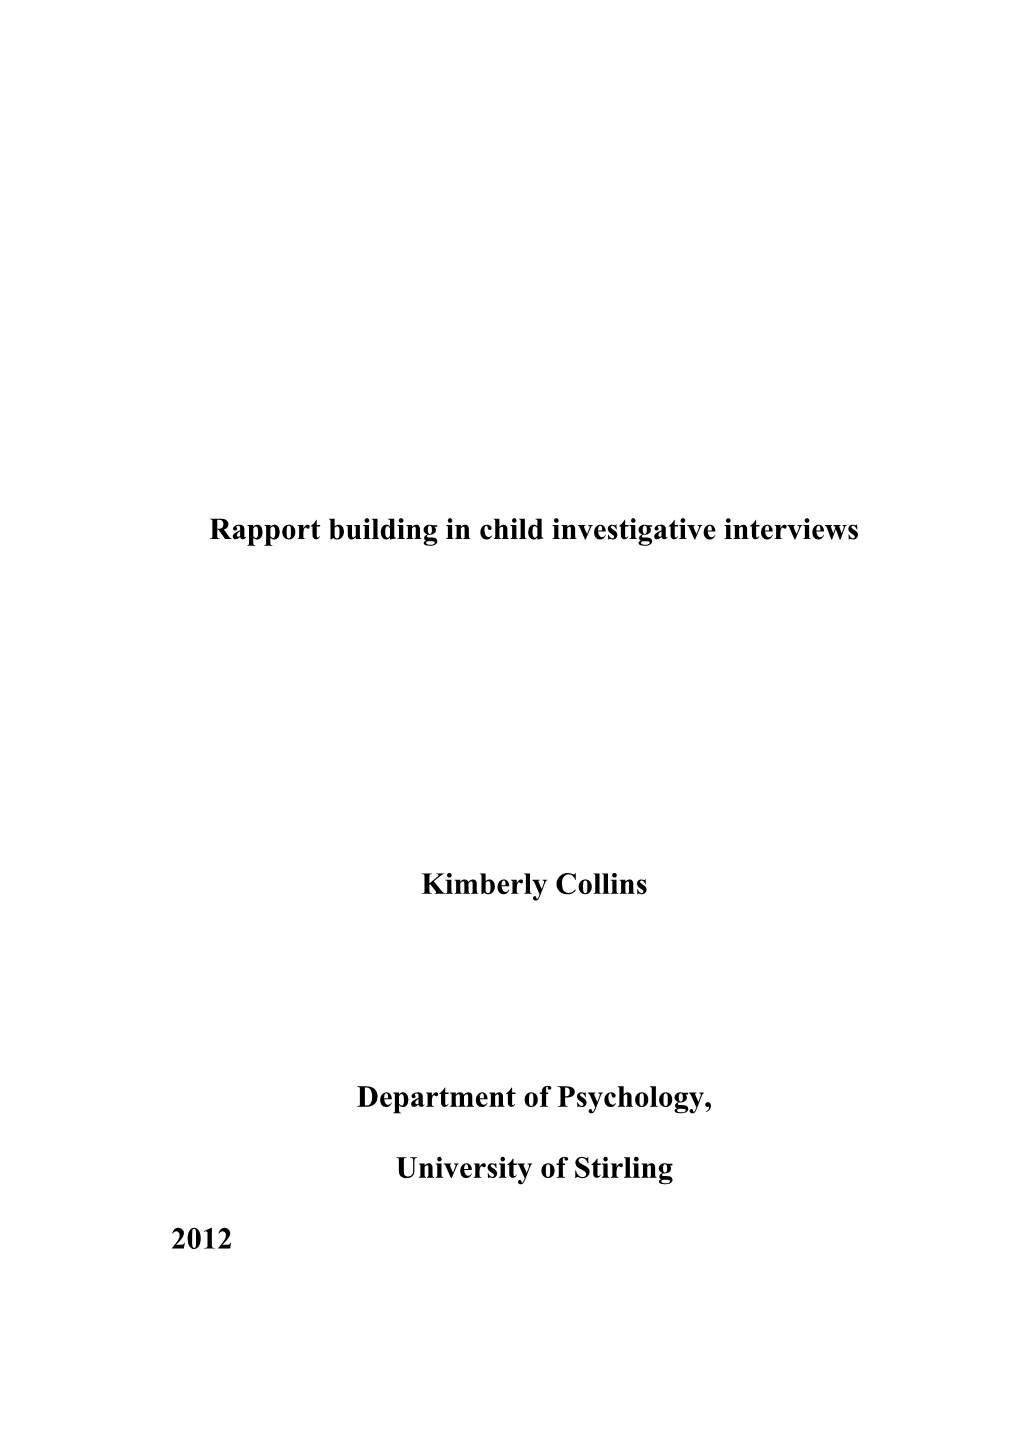 Rapport Building in Child Investigative Interviews